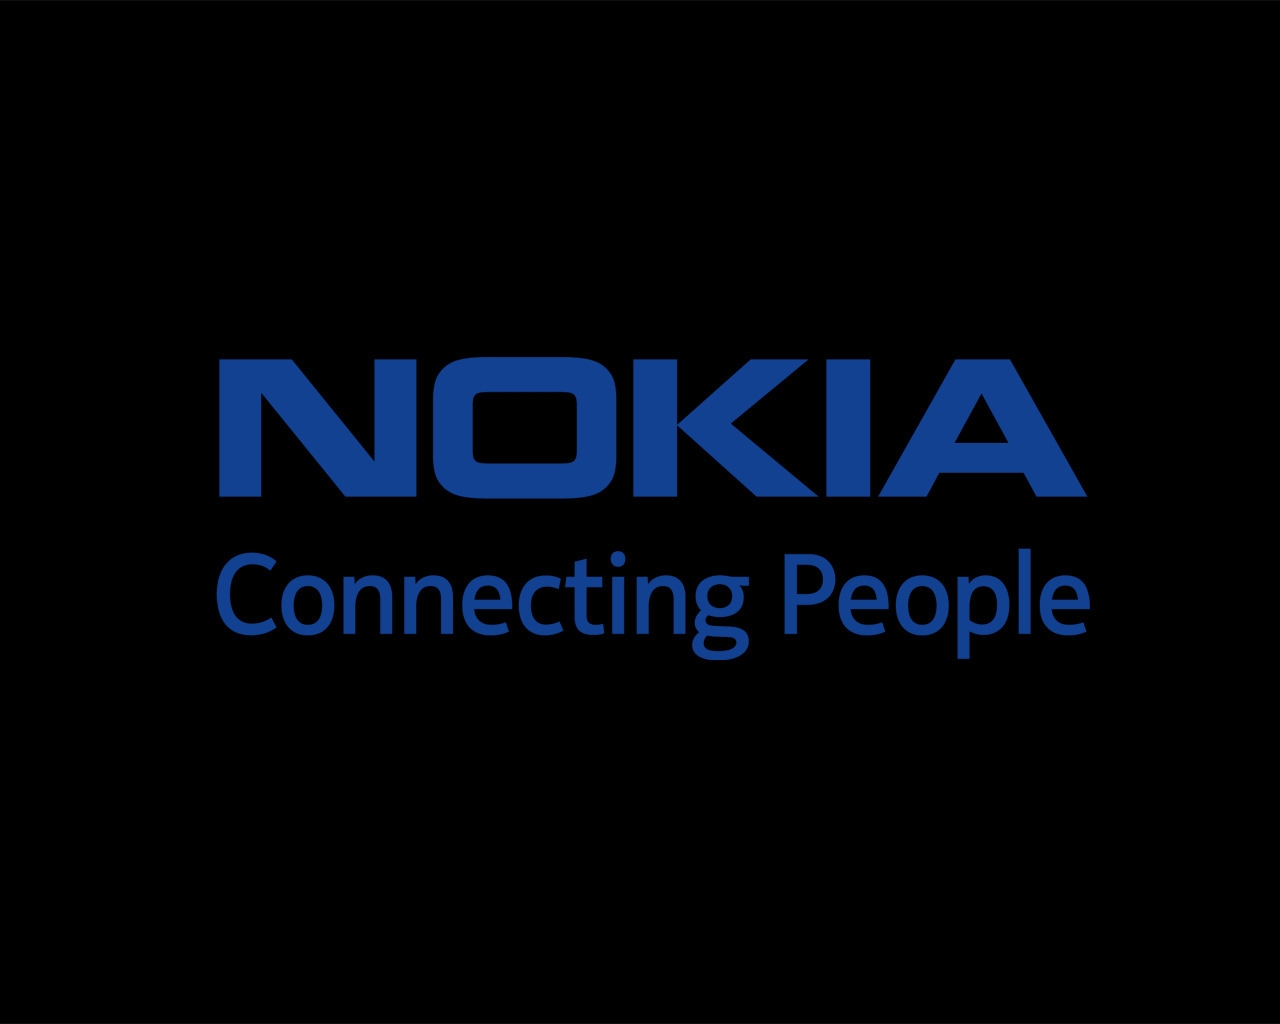 Nokia for 1280 x 1024 resolution